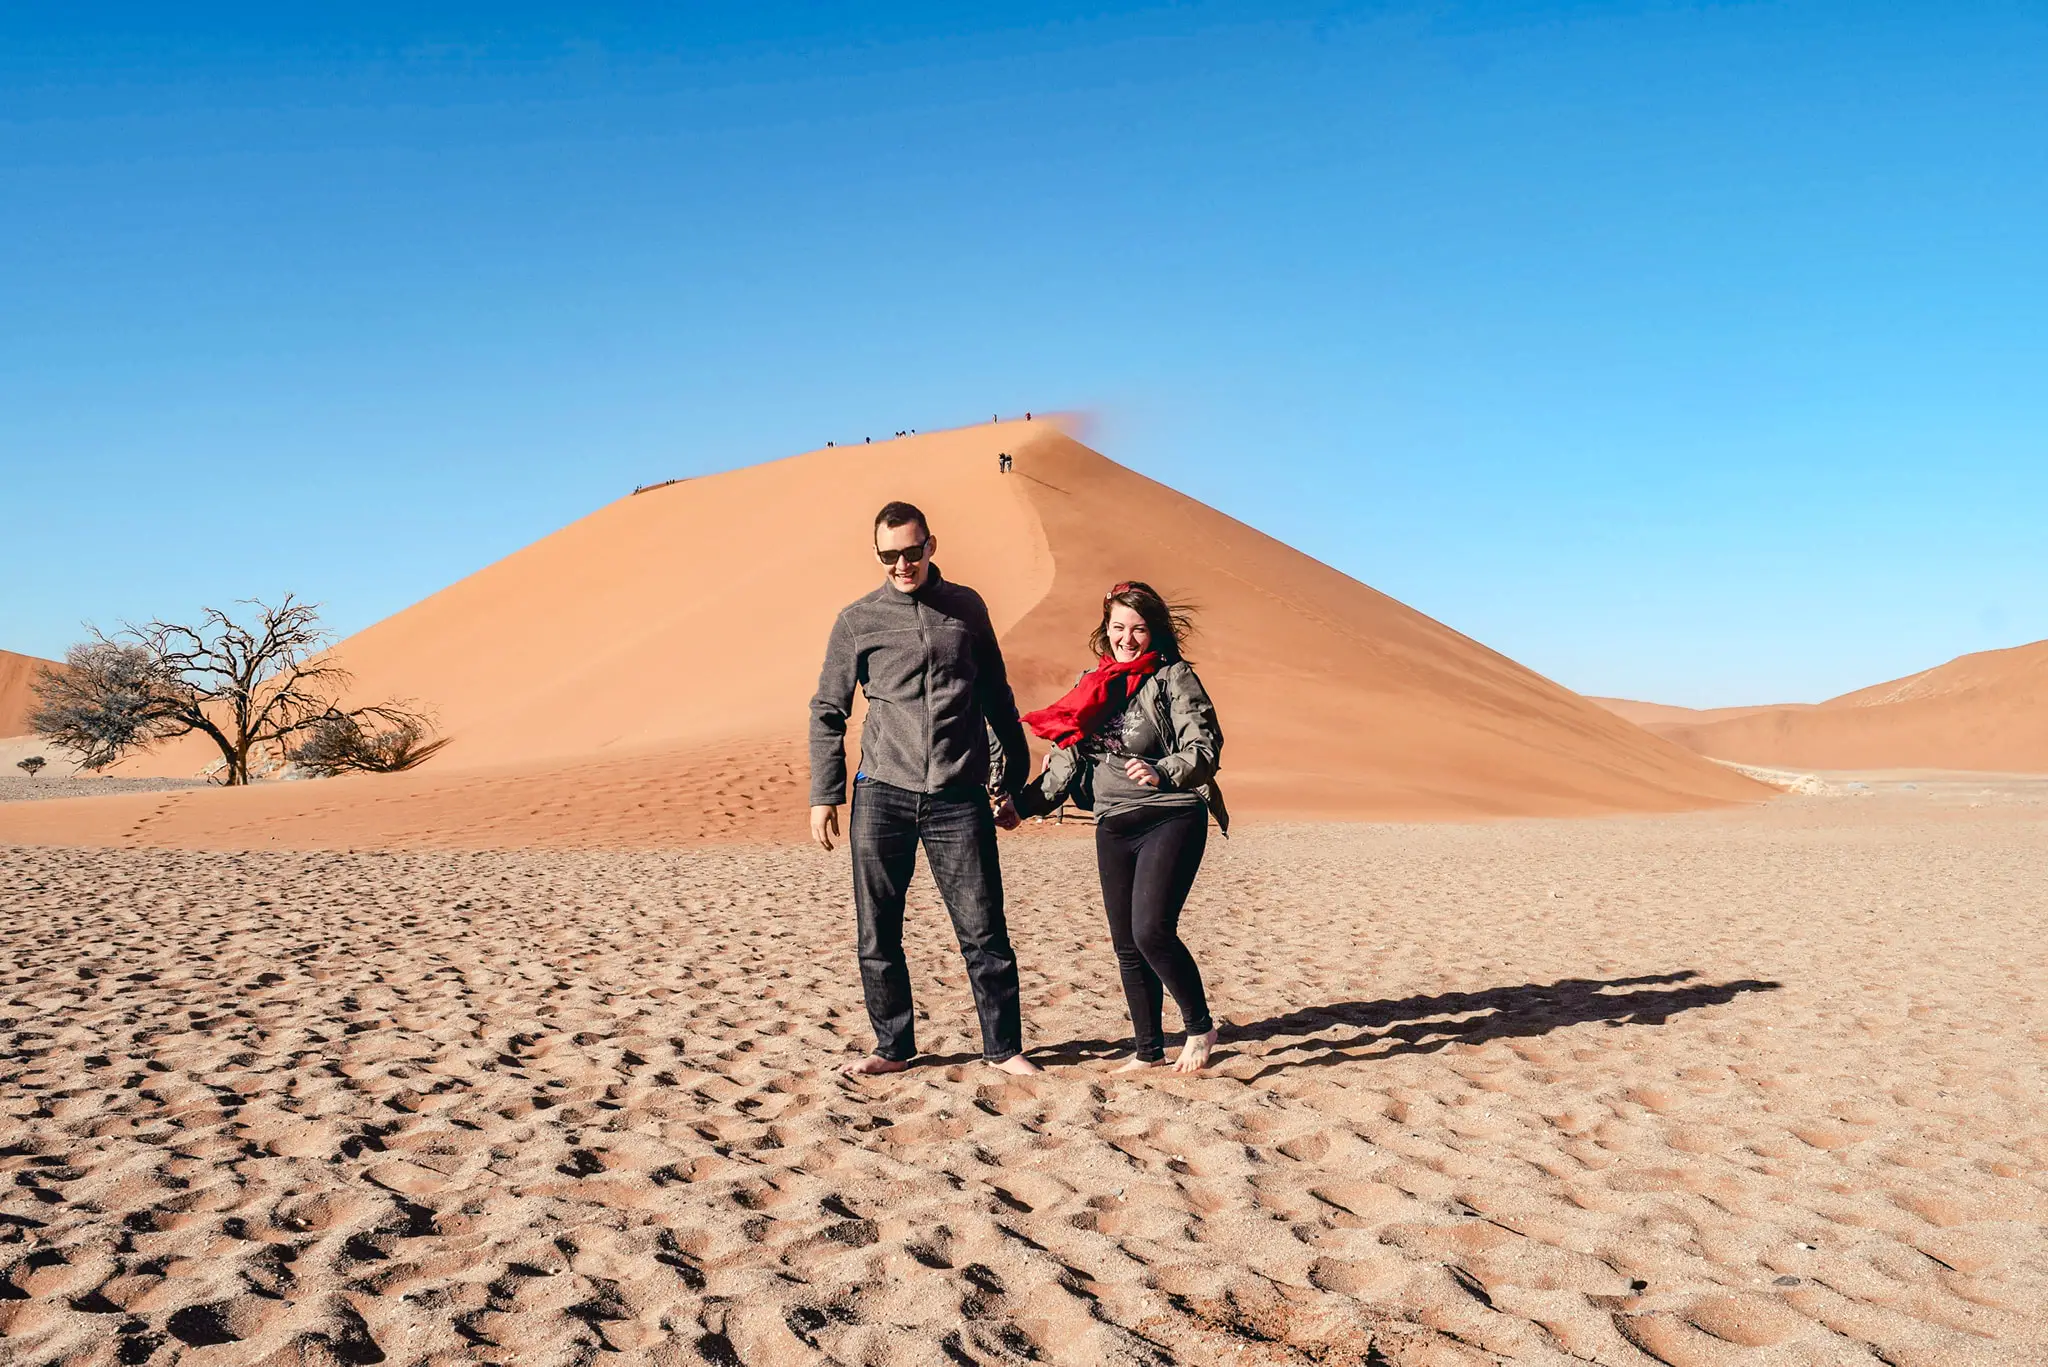 Katie & Jake at Dune 45 in Namibia